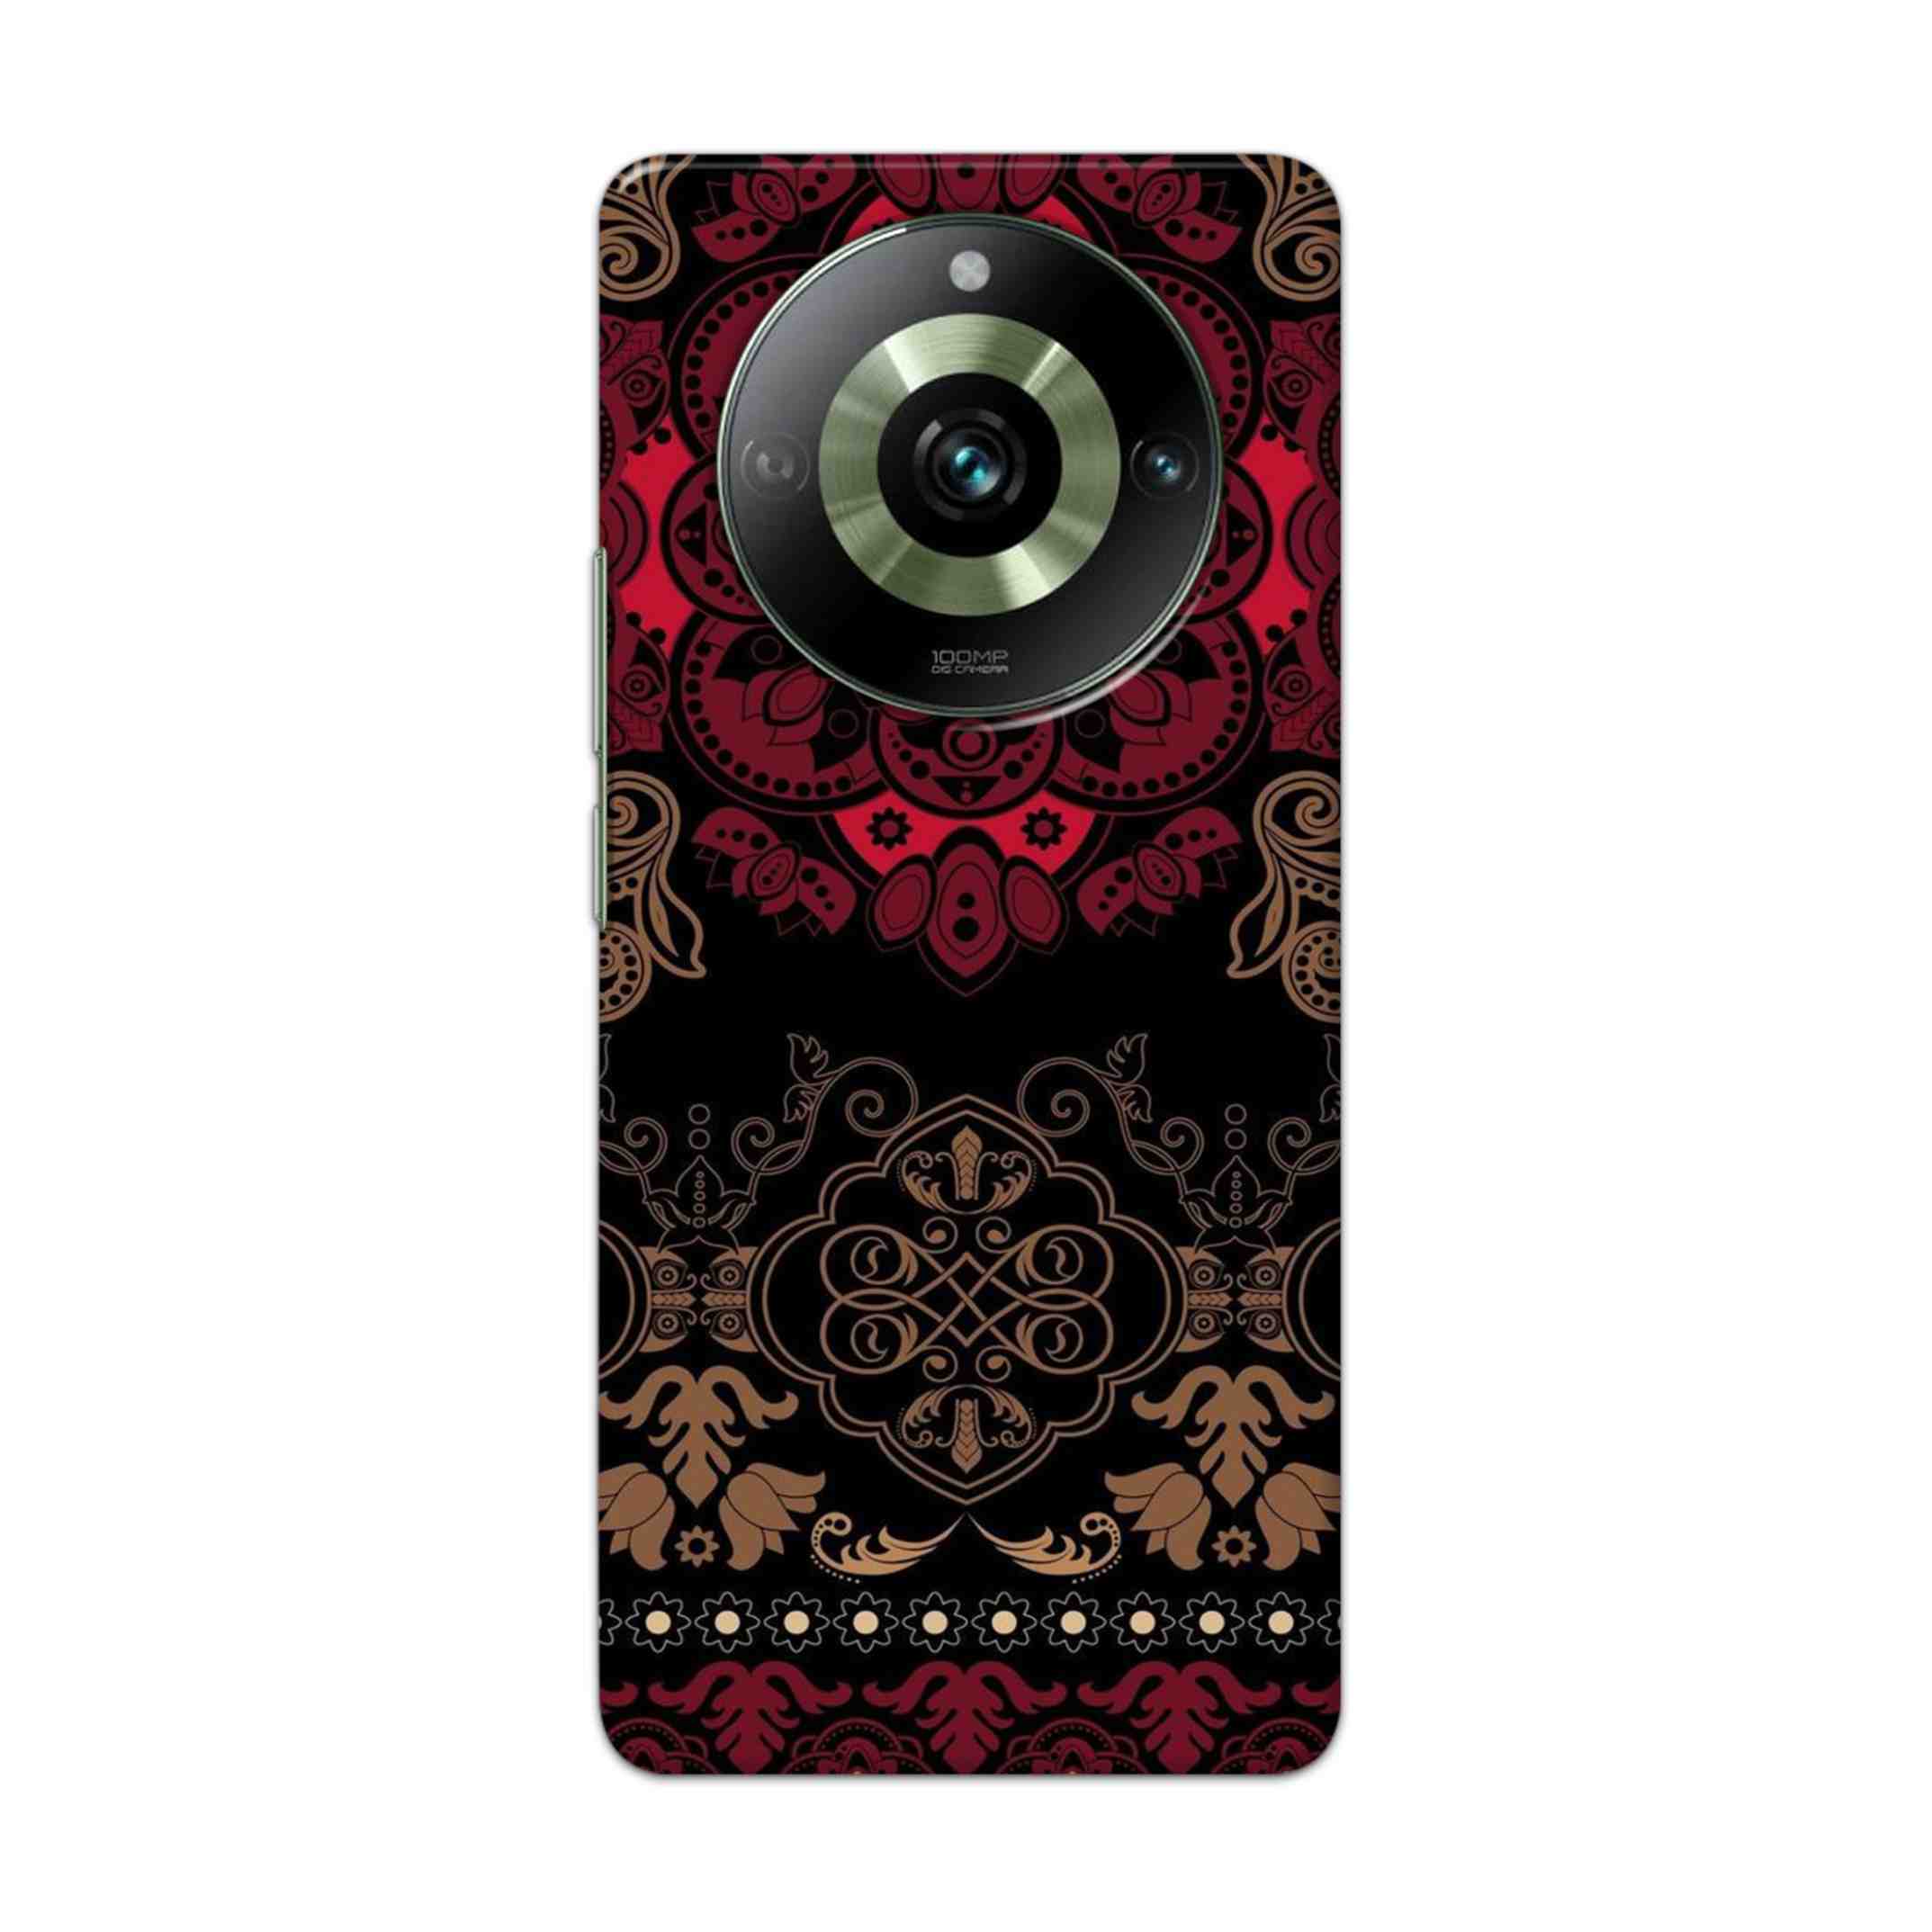 Buy Christian Mandalas Hard Back Mobile Phone Case Cover For Realme11 pro5g Online